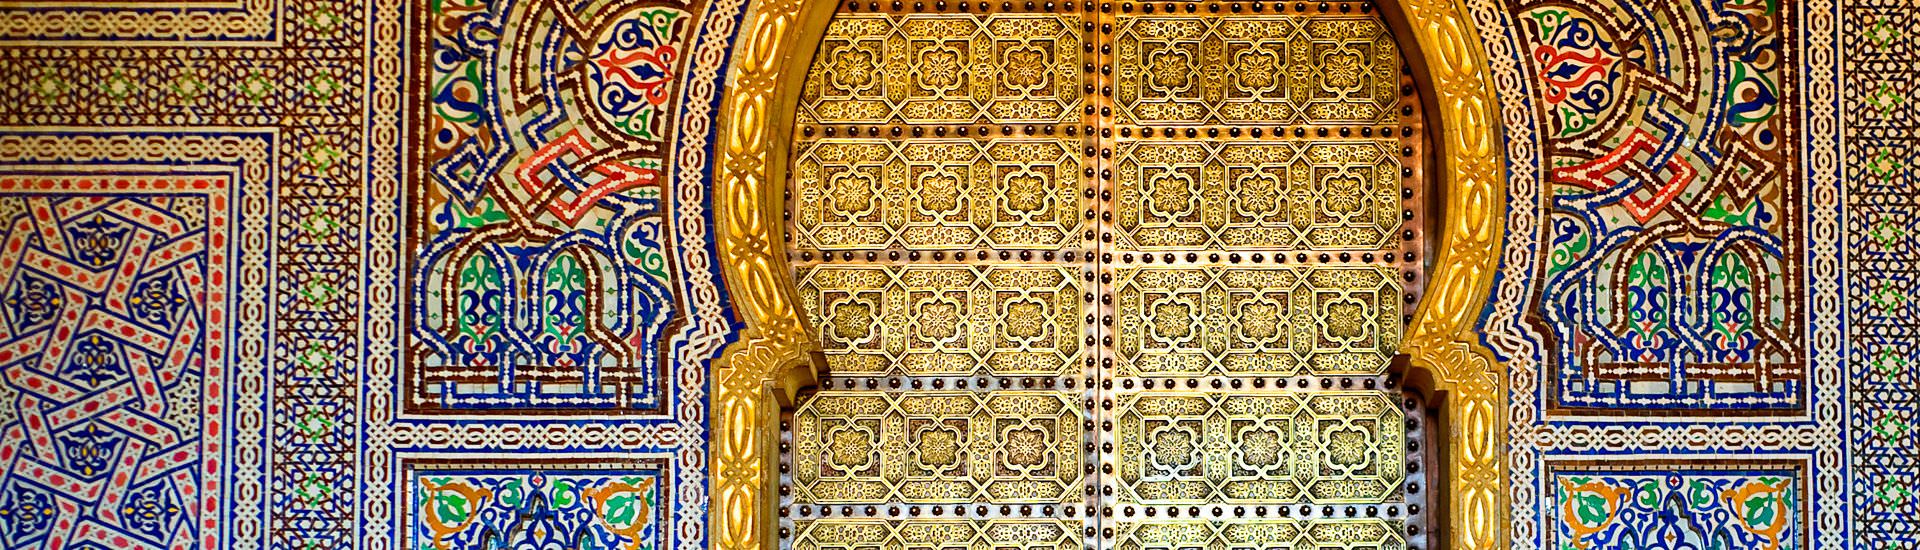 Mausoleum Mohammed V in Rabat |  R.V. Bulck, iStockphoto.com / Chamleon